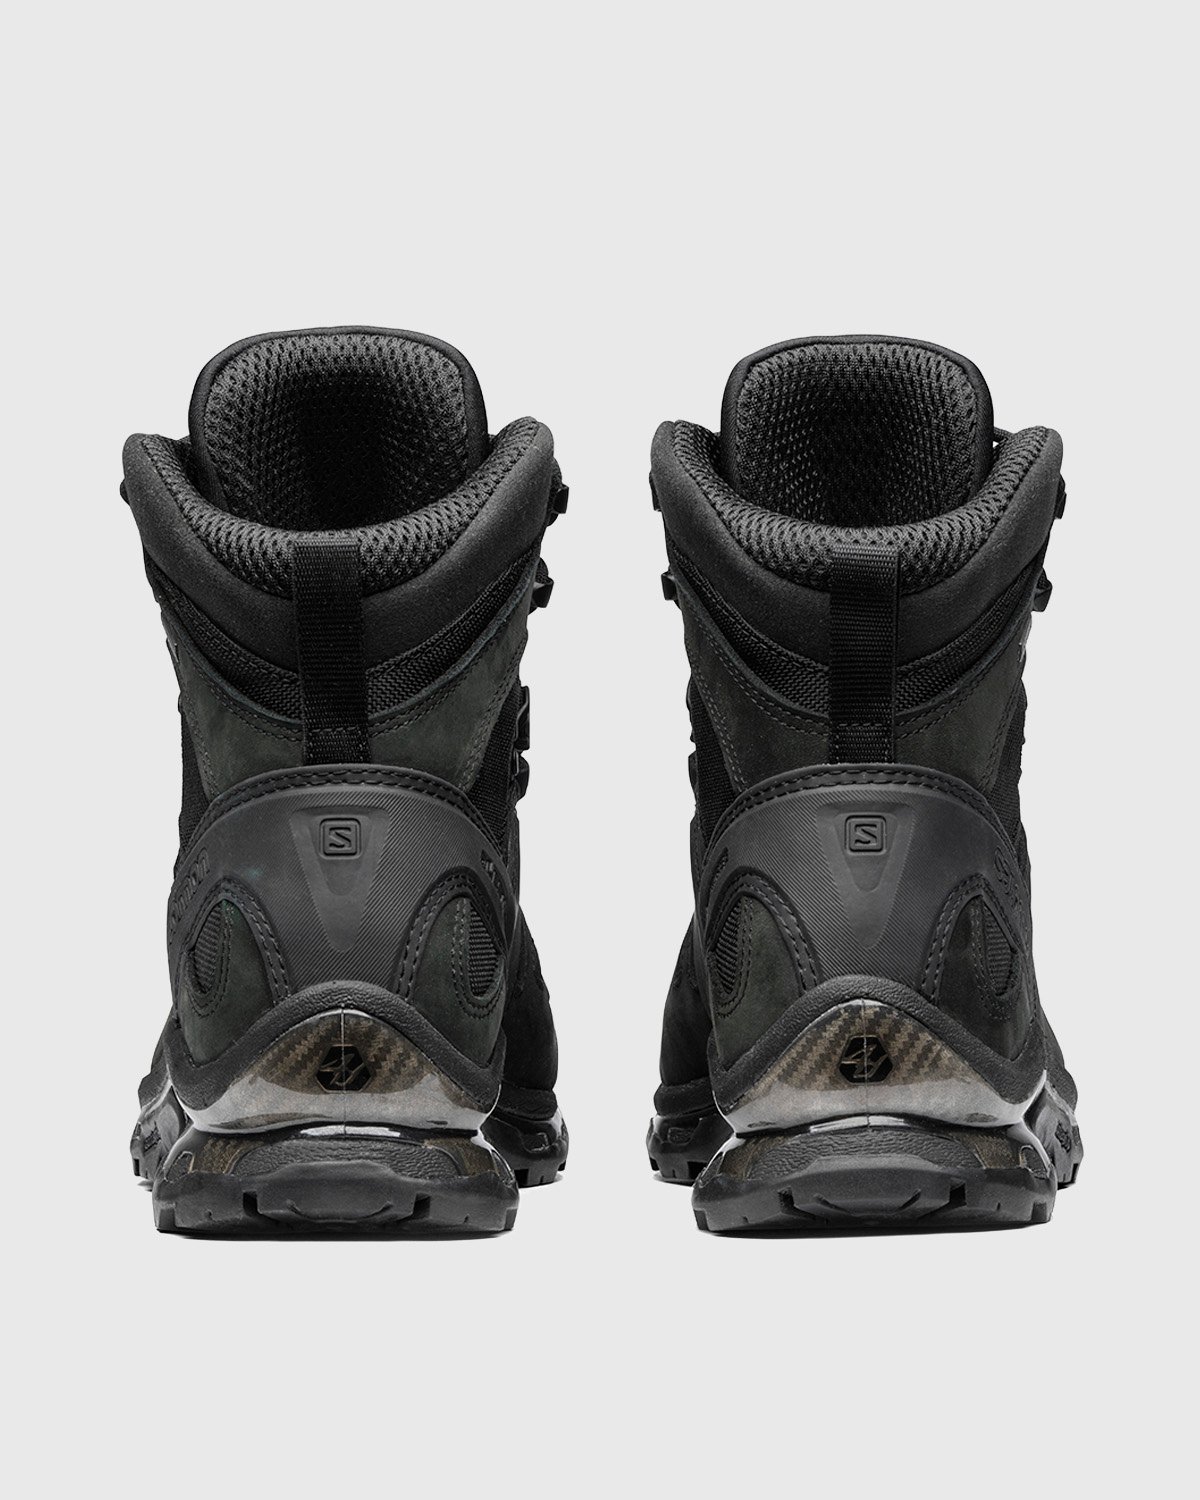 Salomon - Quest 4D GTX Advanced Black - Footwear - Black - Image 4